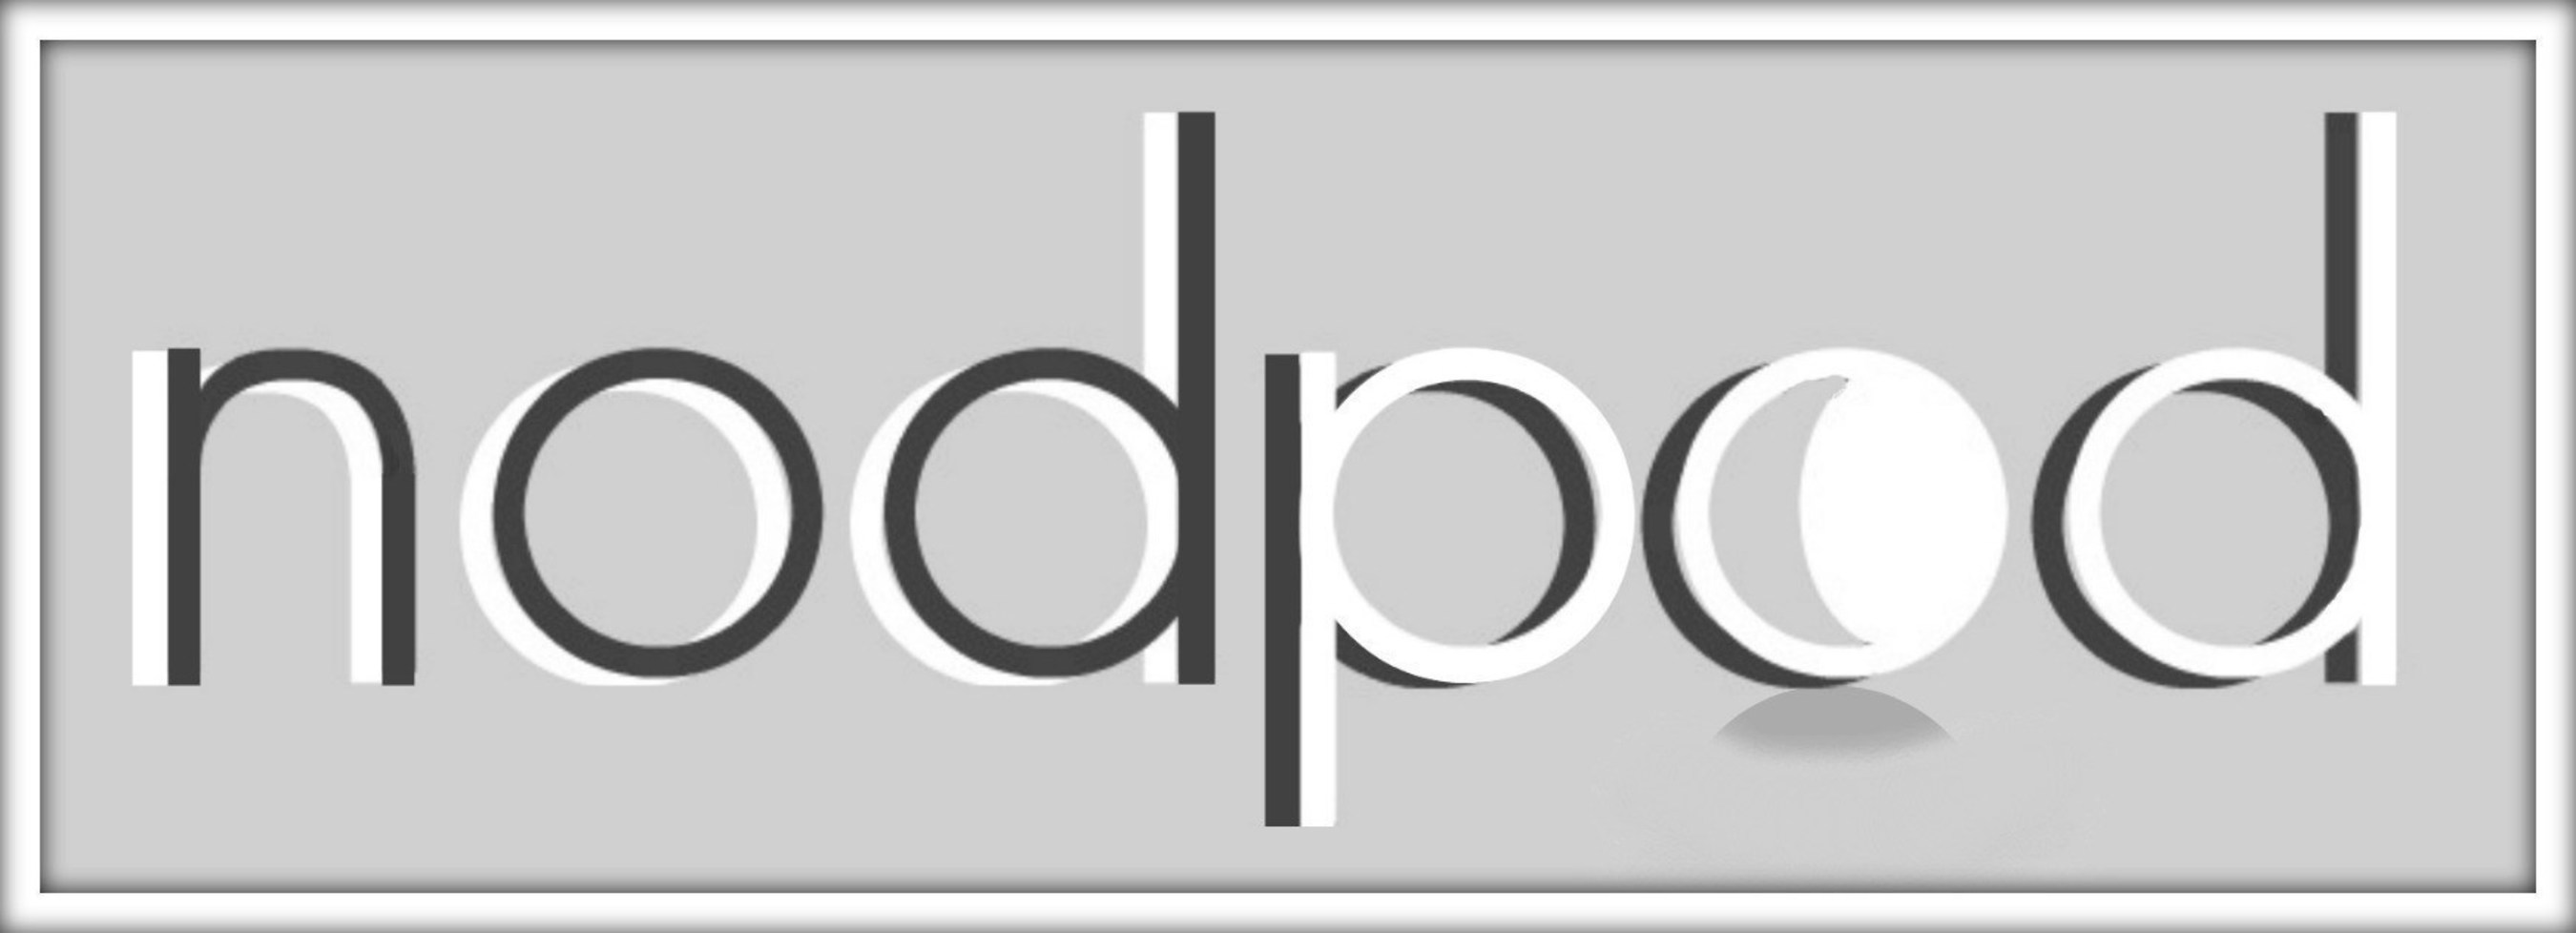 The NodPod Logo